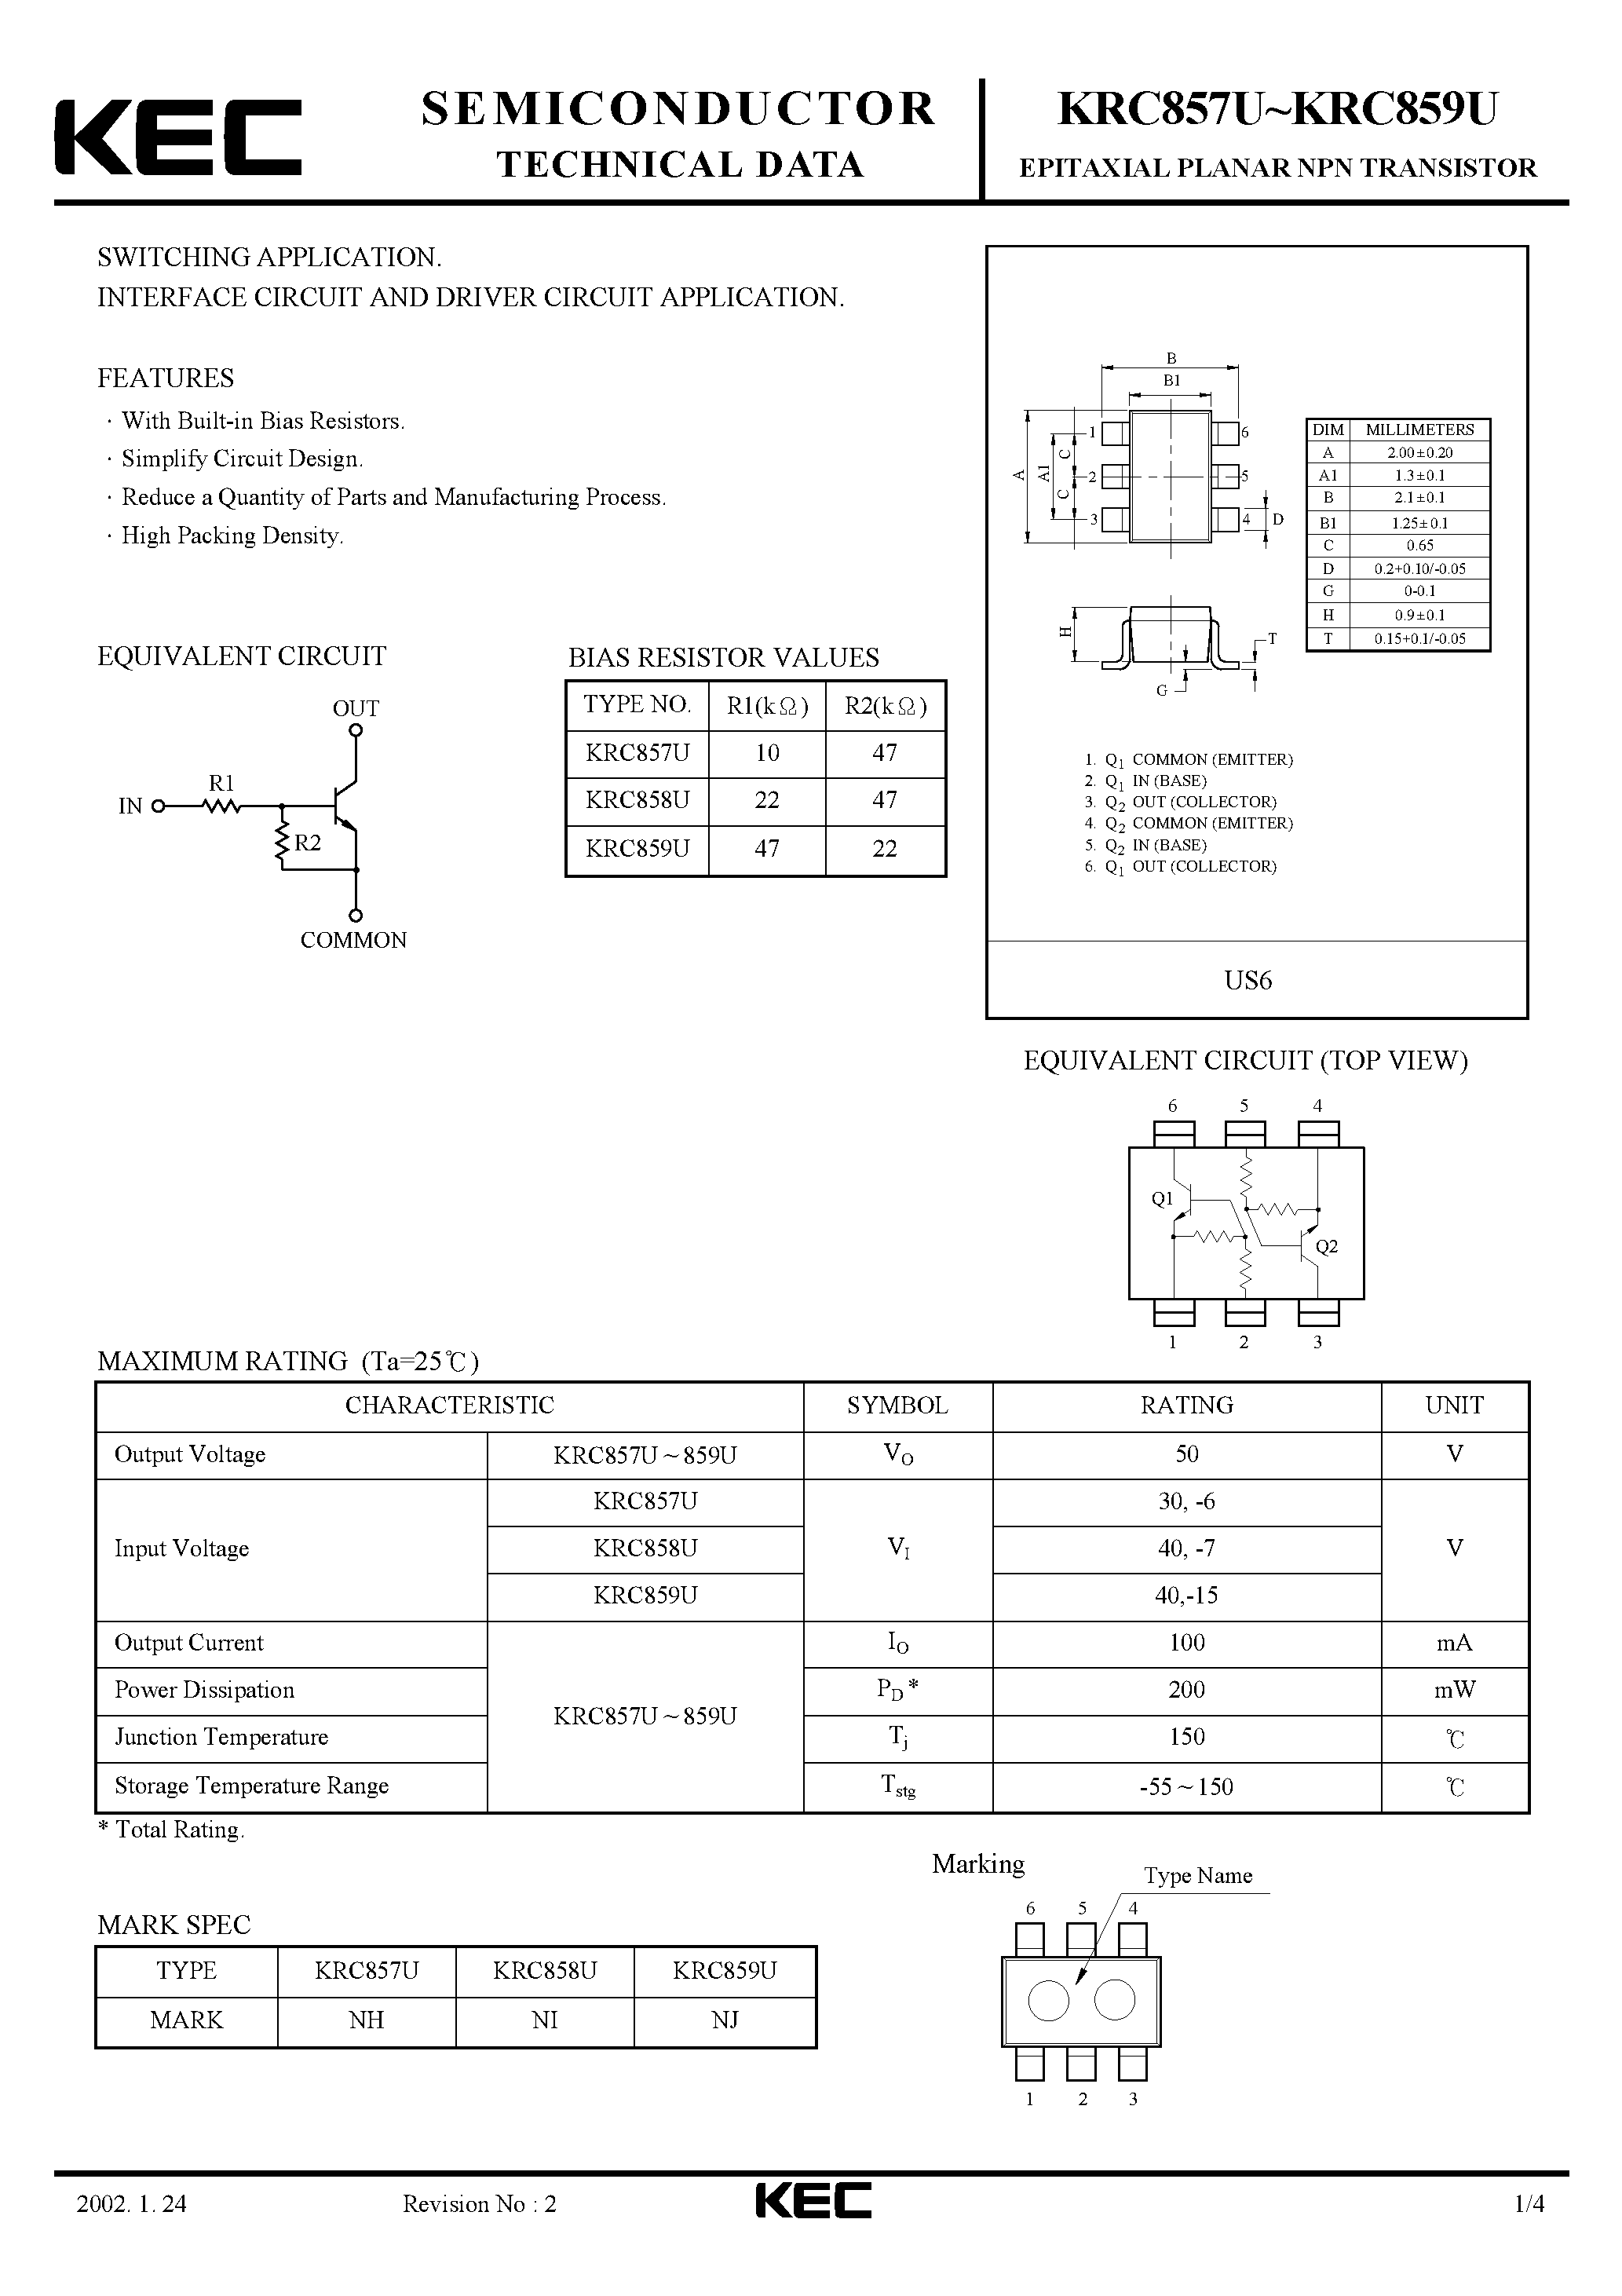 Datasheet KRC857U - (KRC857U - KRC859U) EPITAXIAL PLANAR NPN TRANSISTOR page 1